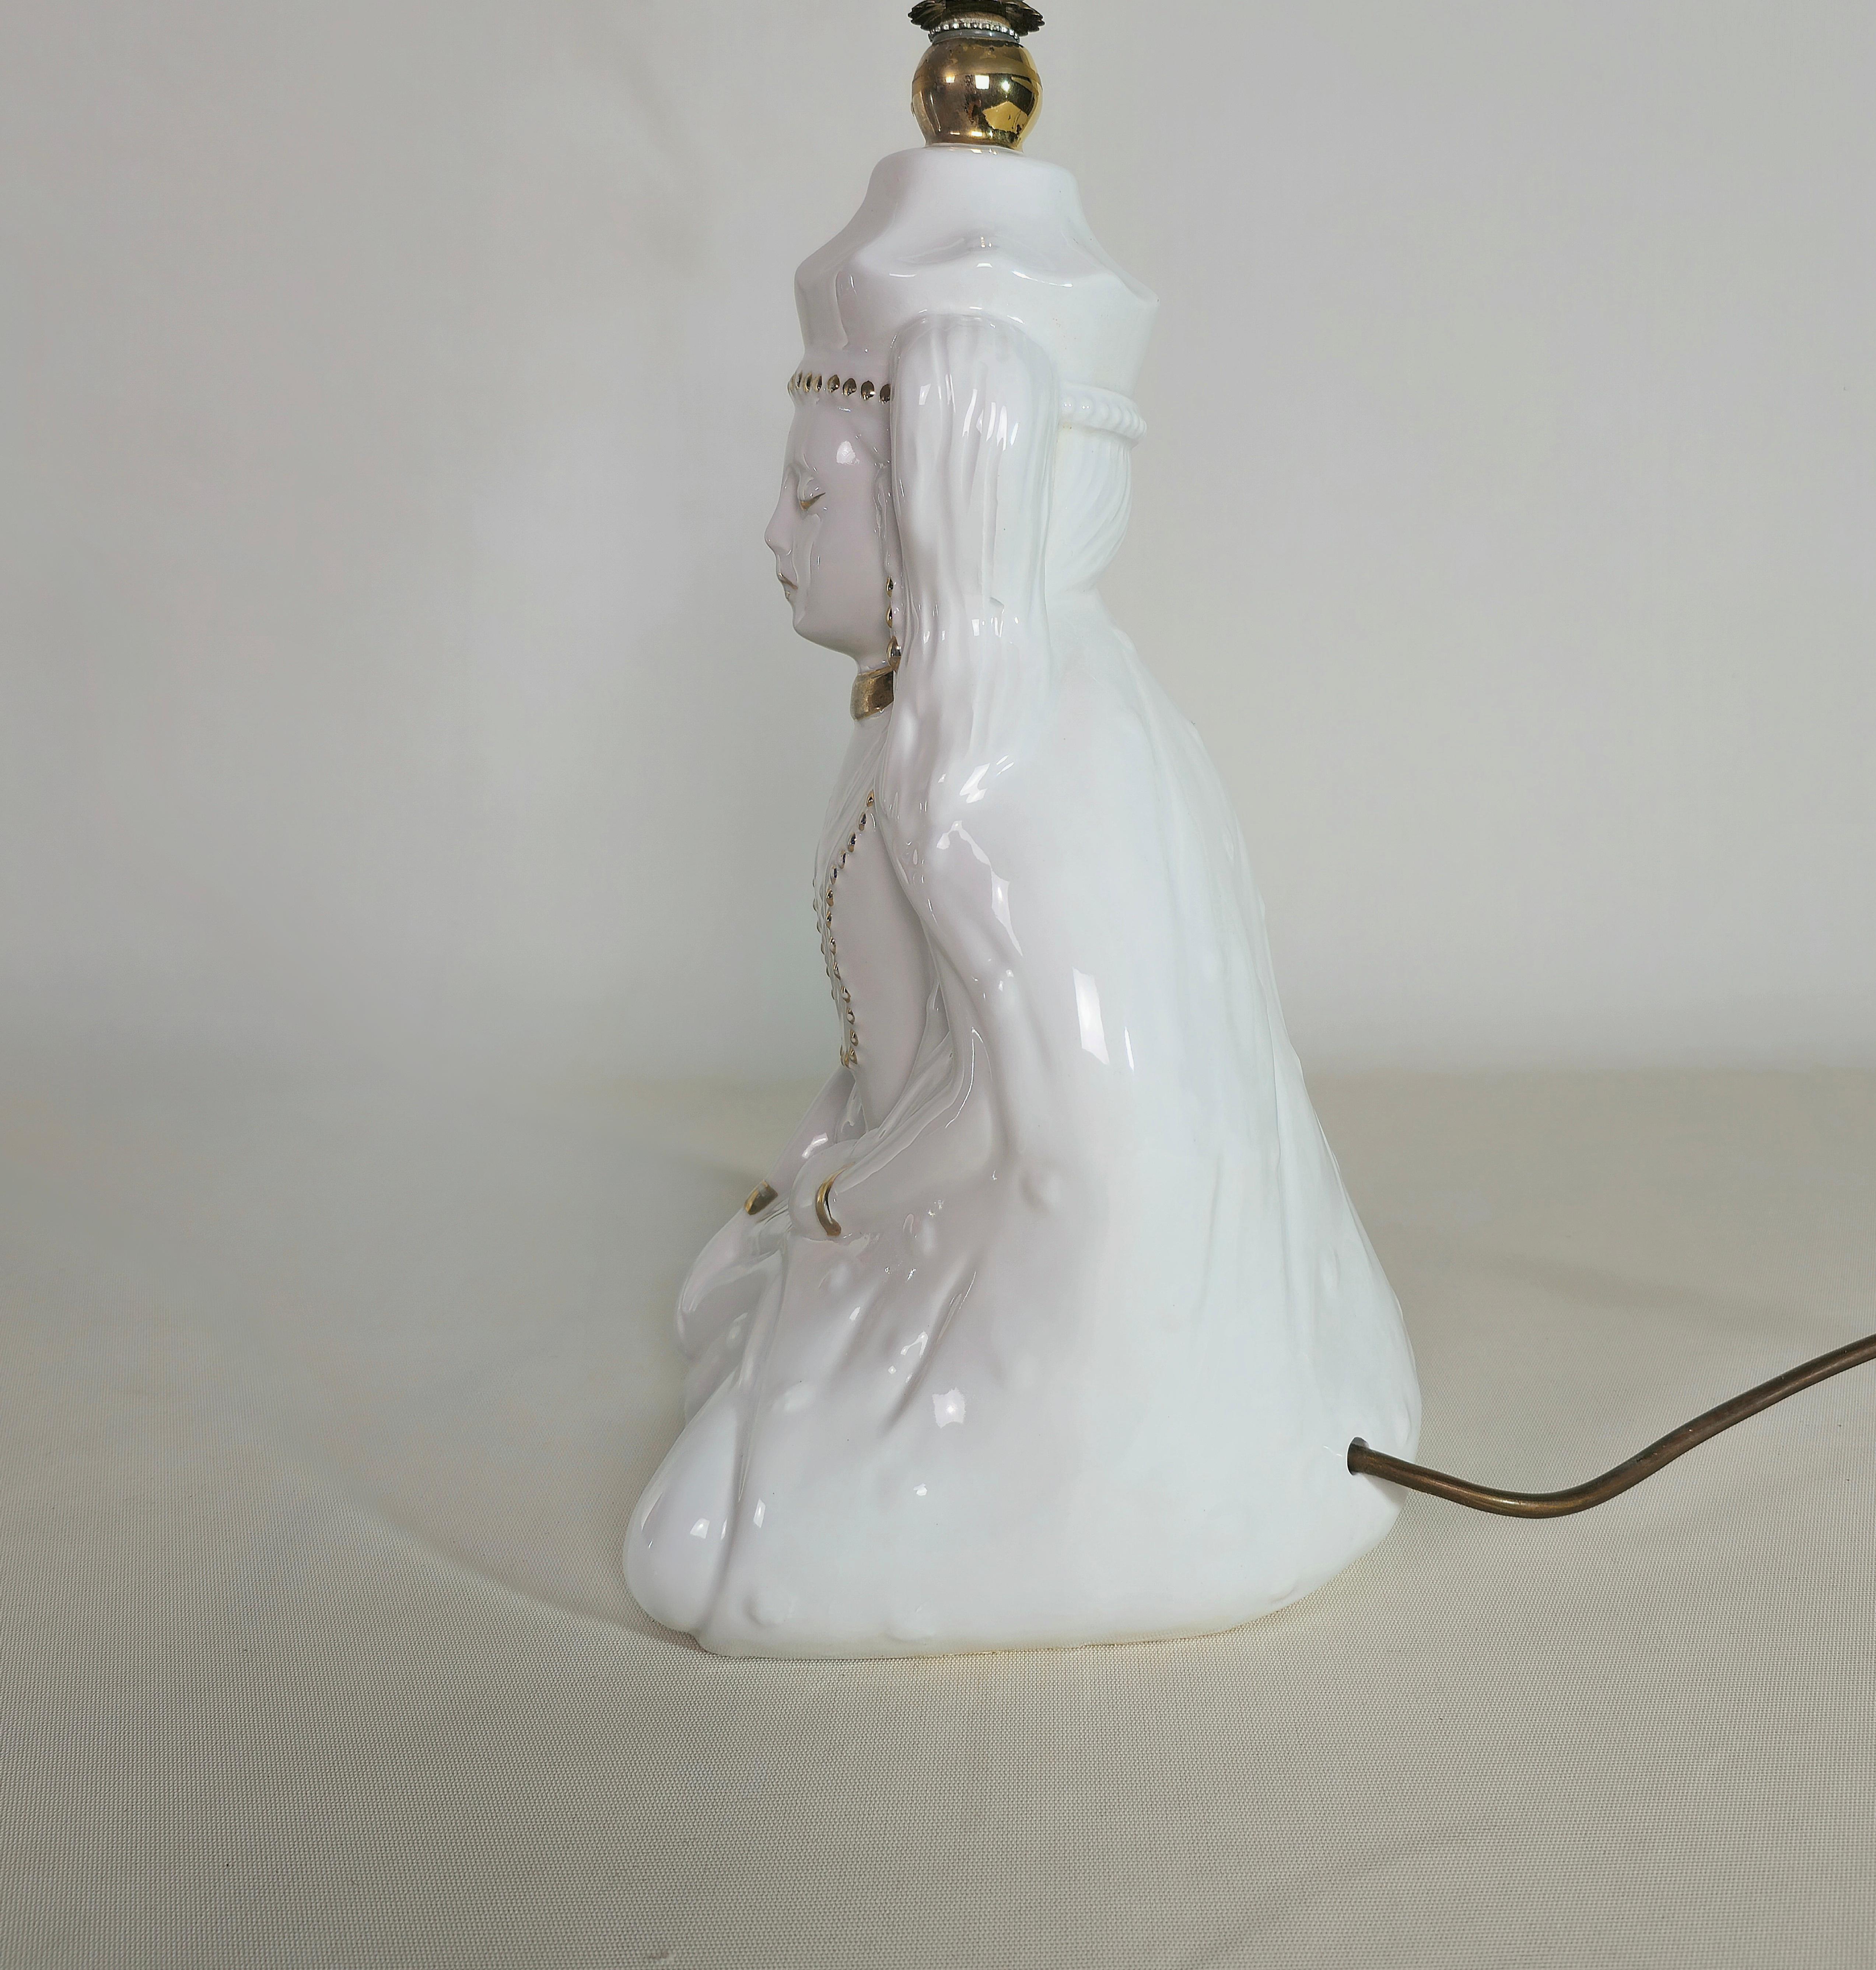 20th Century Table Lamp Porcelain Sculpture White  Midcentury Italian Design 1970s For Sale